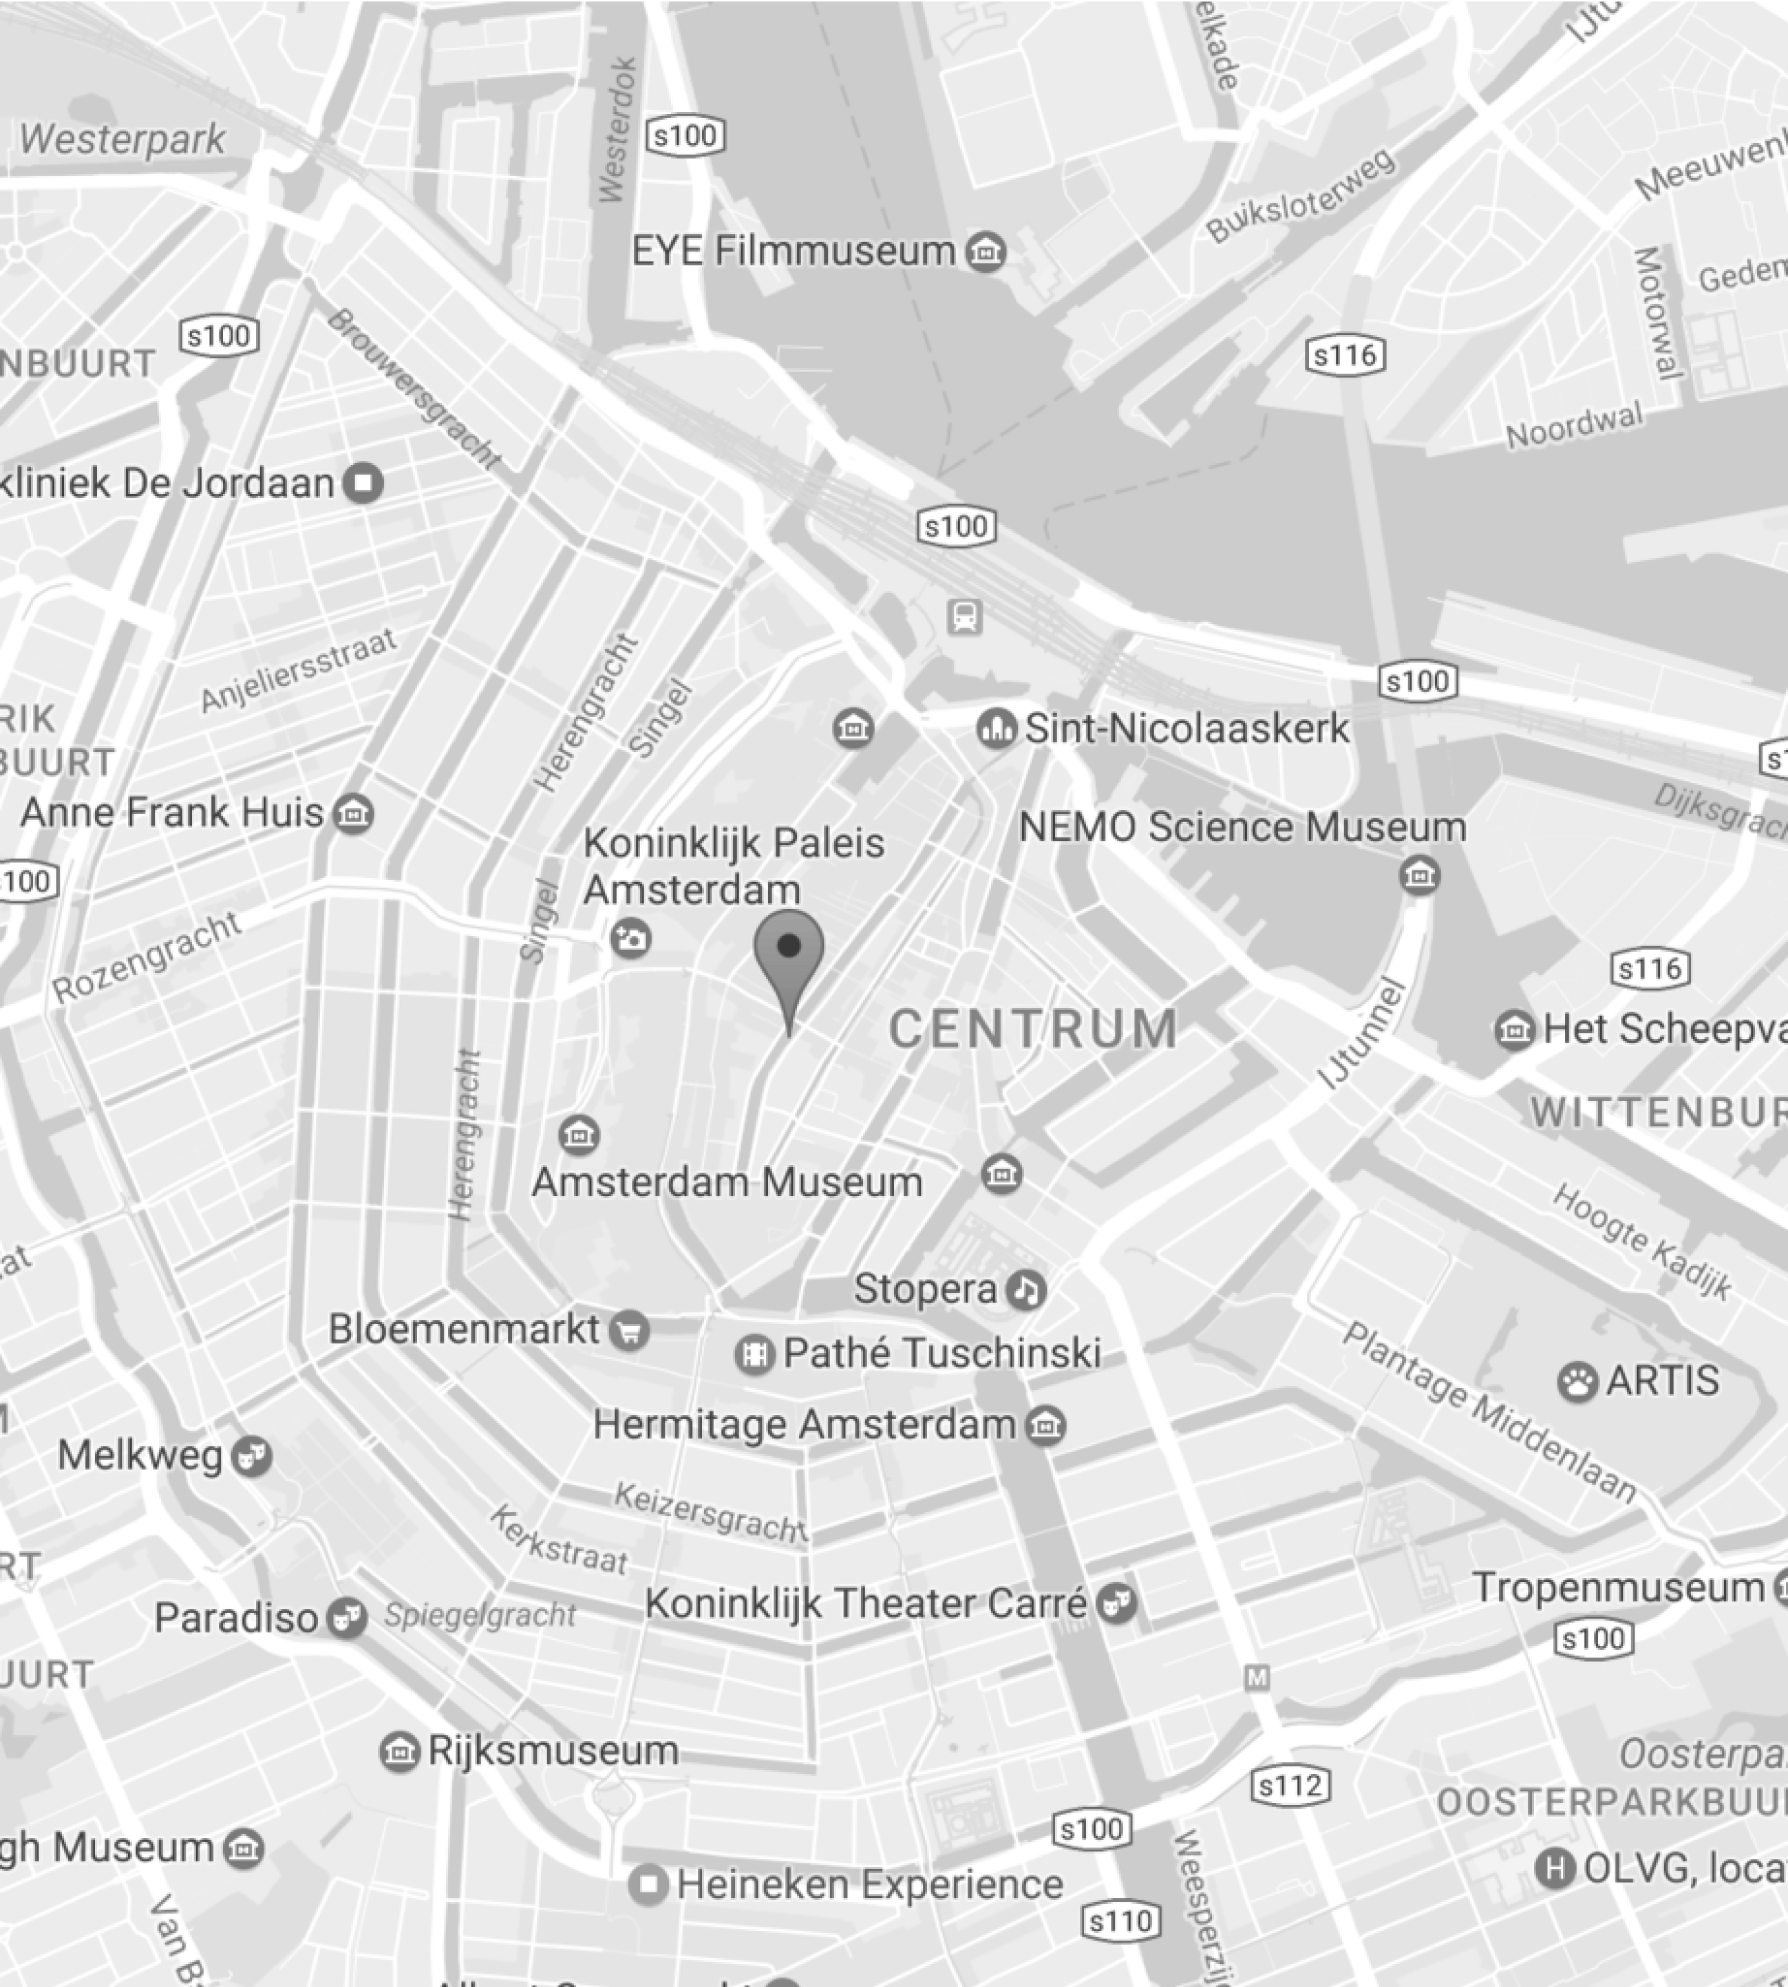 A screenshot of Amsterdam from Google Maps